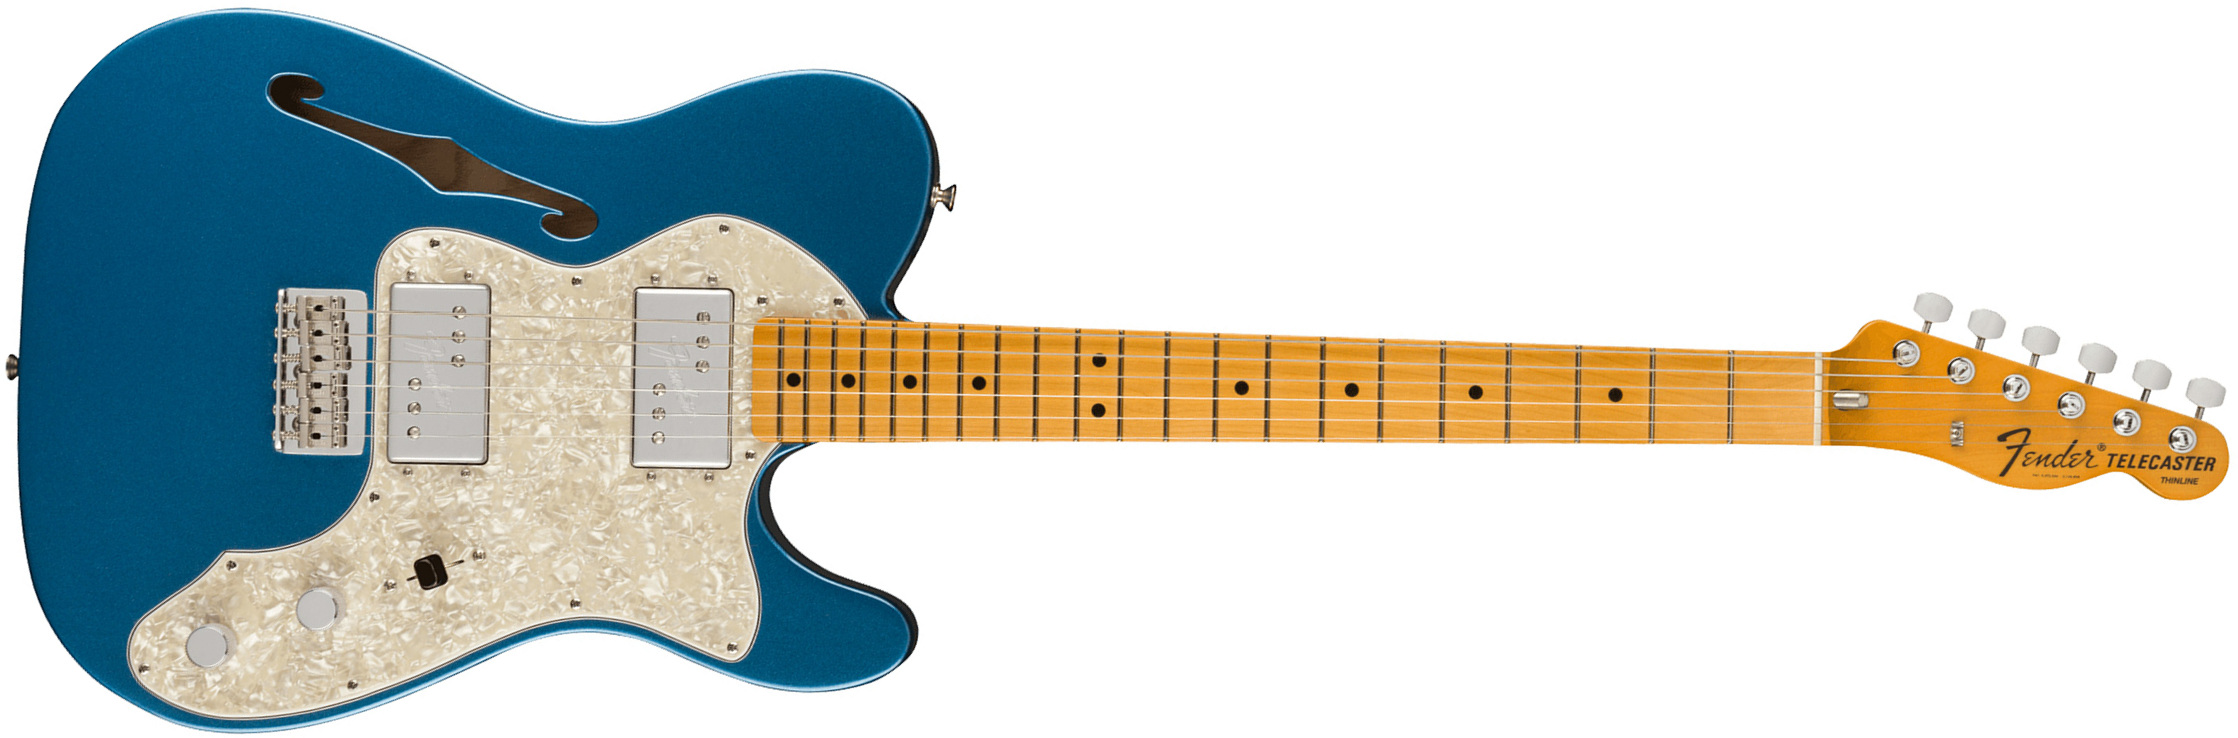 Fender Tele Thinline 1972 American Vintage Ii Usa 2h Ht Mn - Lake Placid Blue - Televorm elektrische gitaar - Main picture